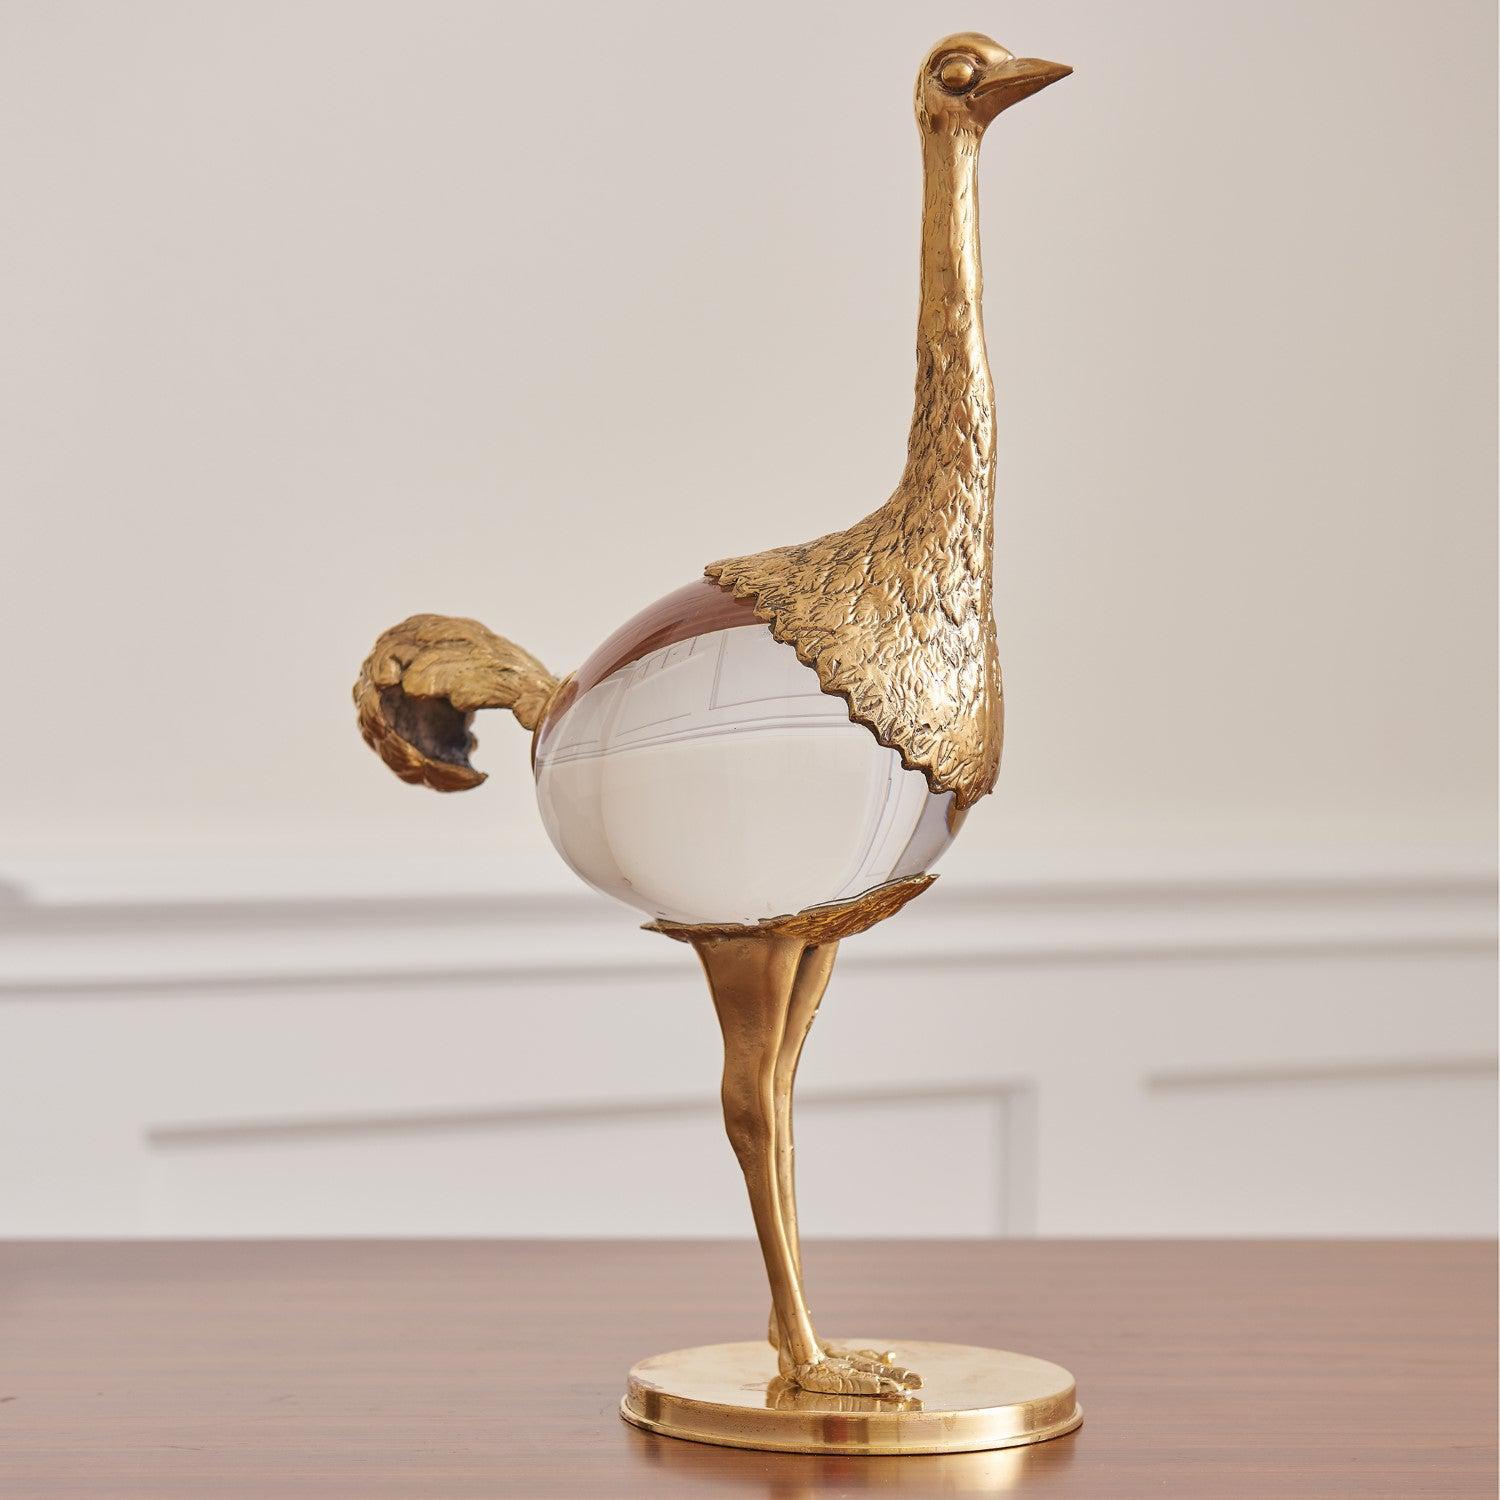 Ostrich-Brass-Global Views-Sculptures & Objects-Artistic Elements